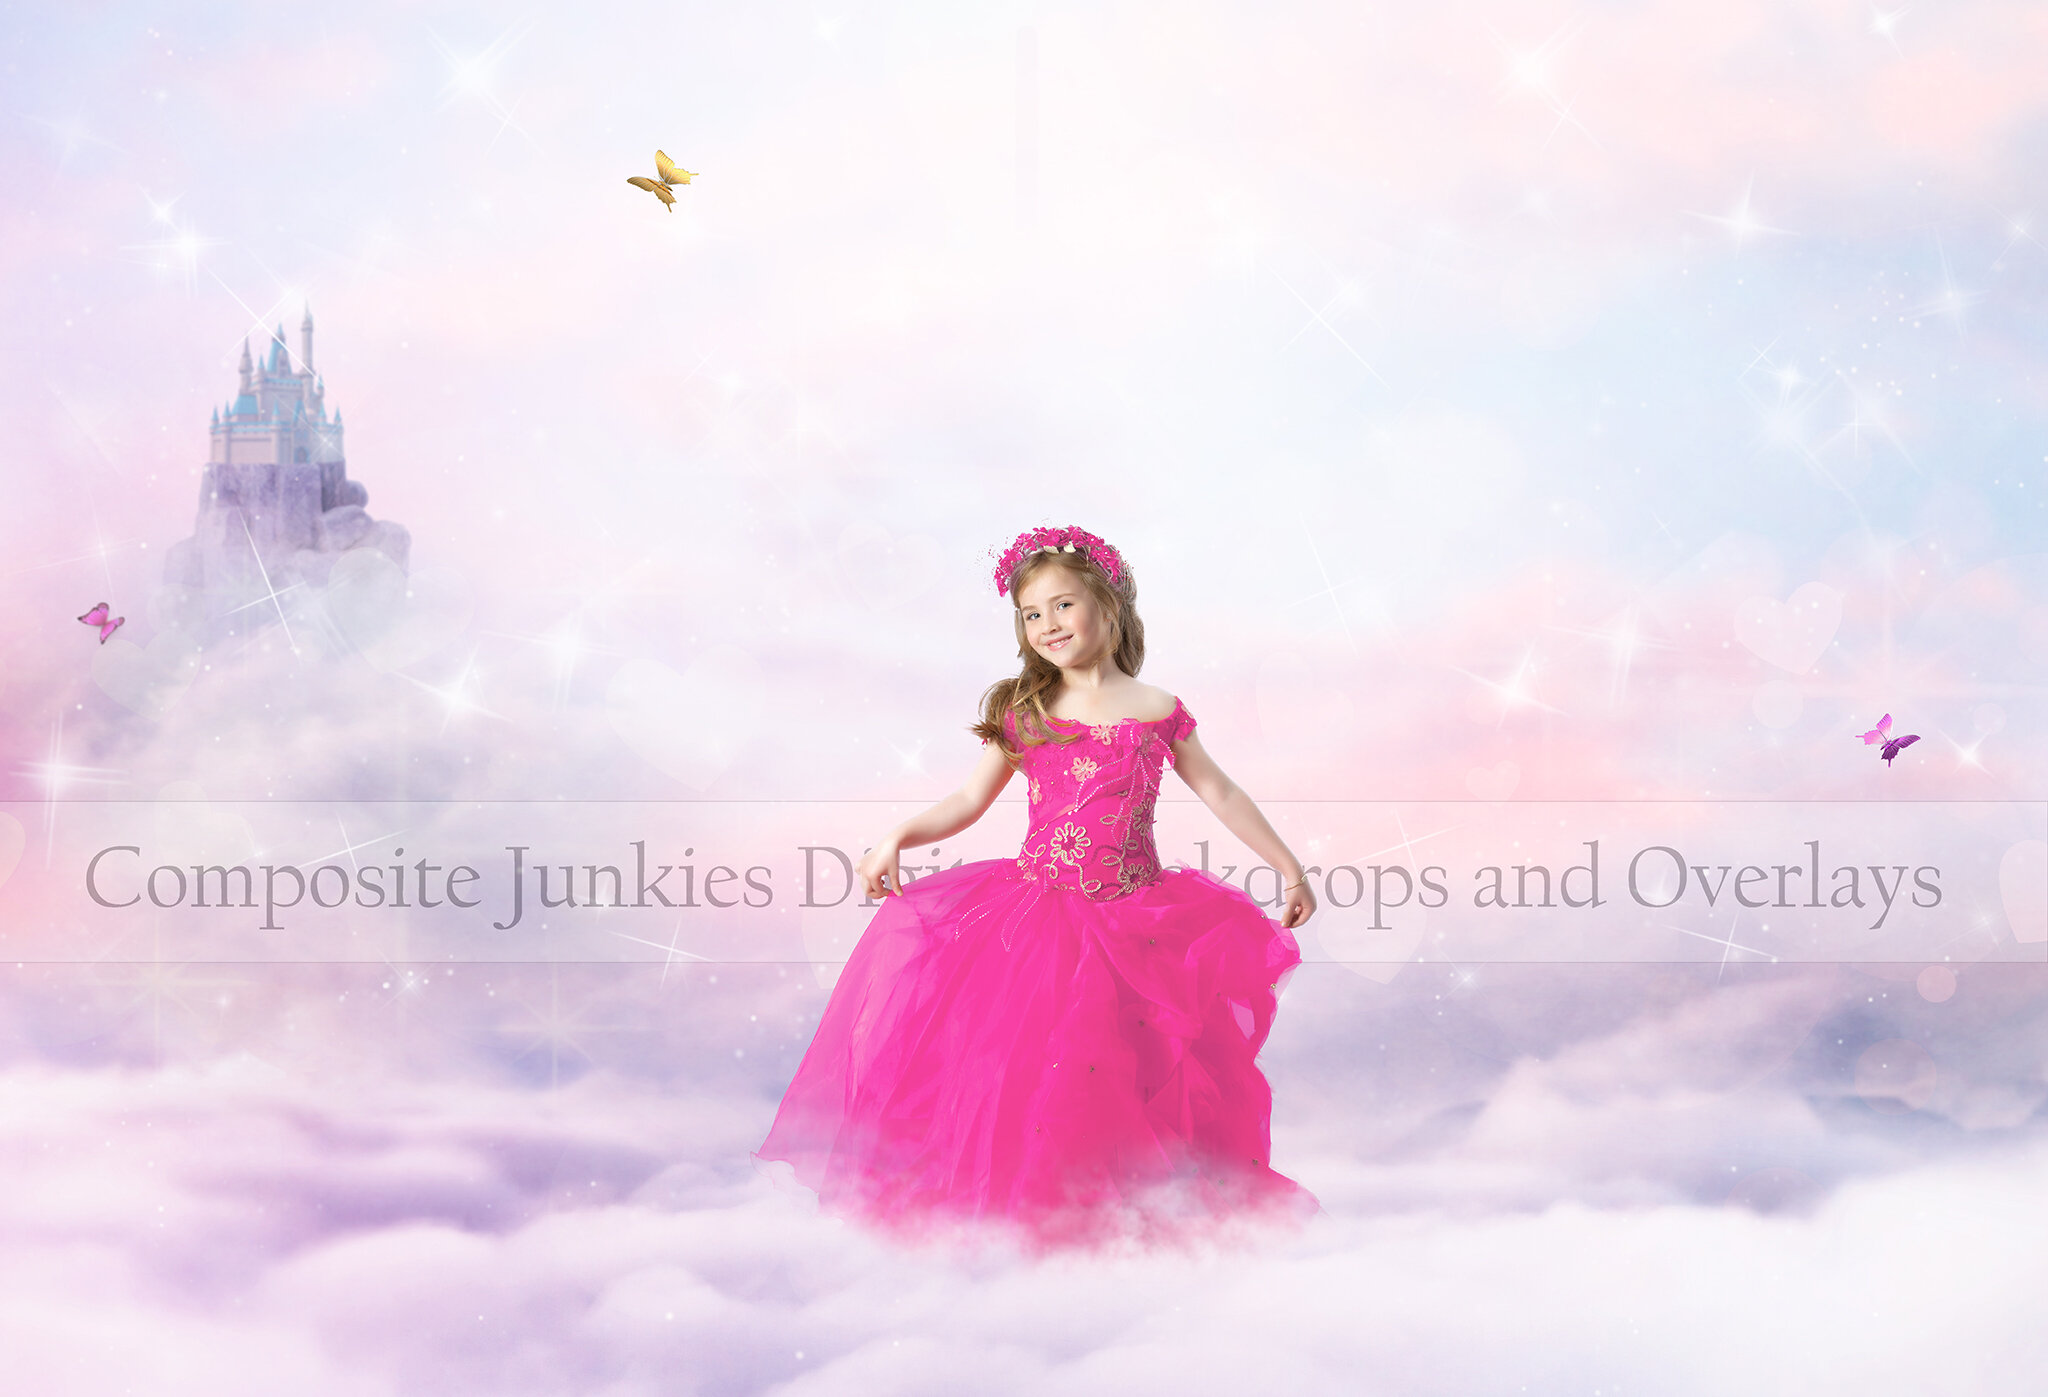 Composite Junkies 2021 - Castle Clouds - Model Logoed.jpg